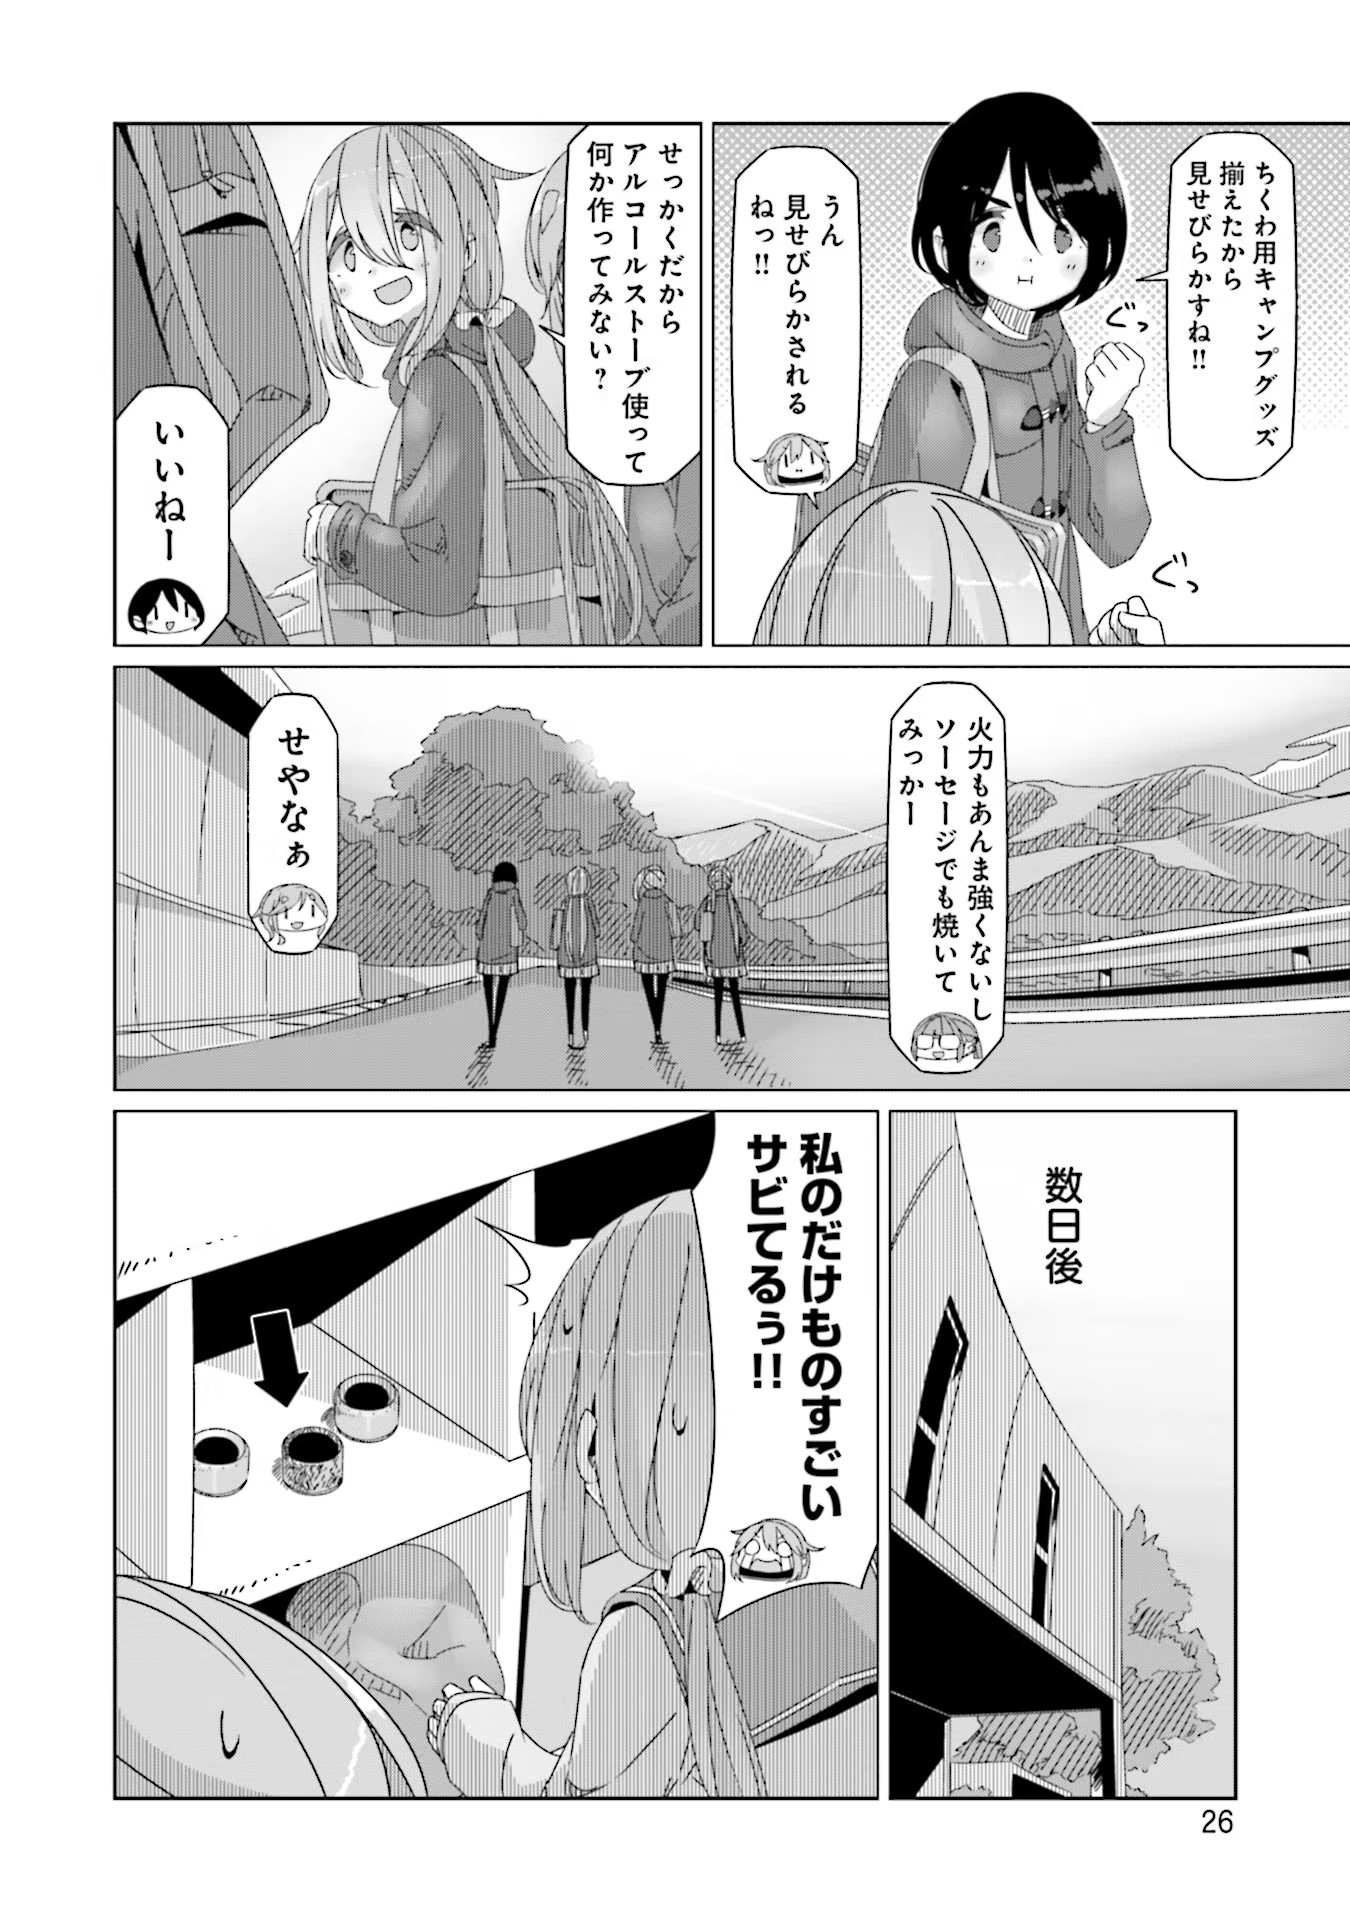 Yuru Camp - Chapter 53 - Page 28